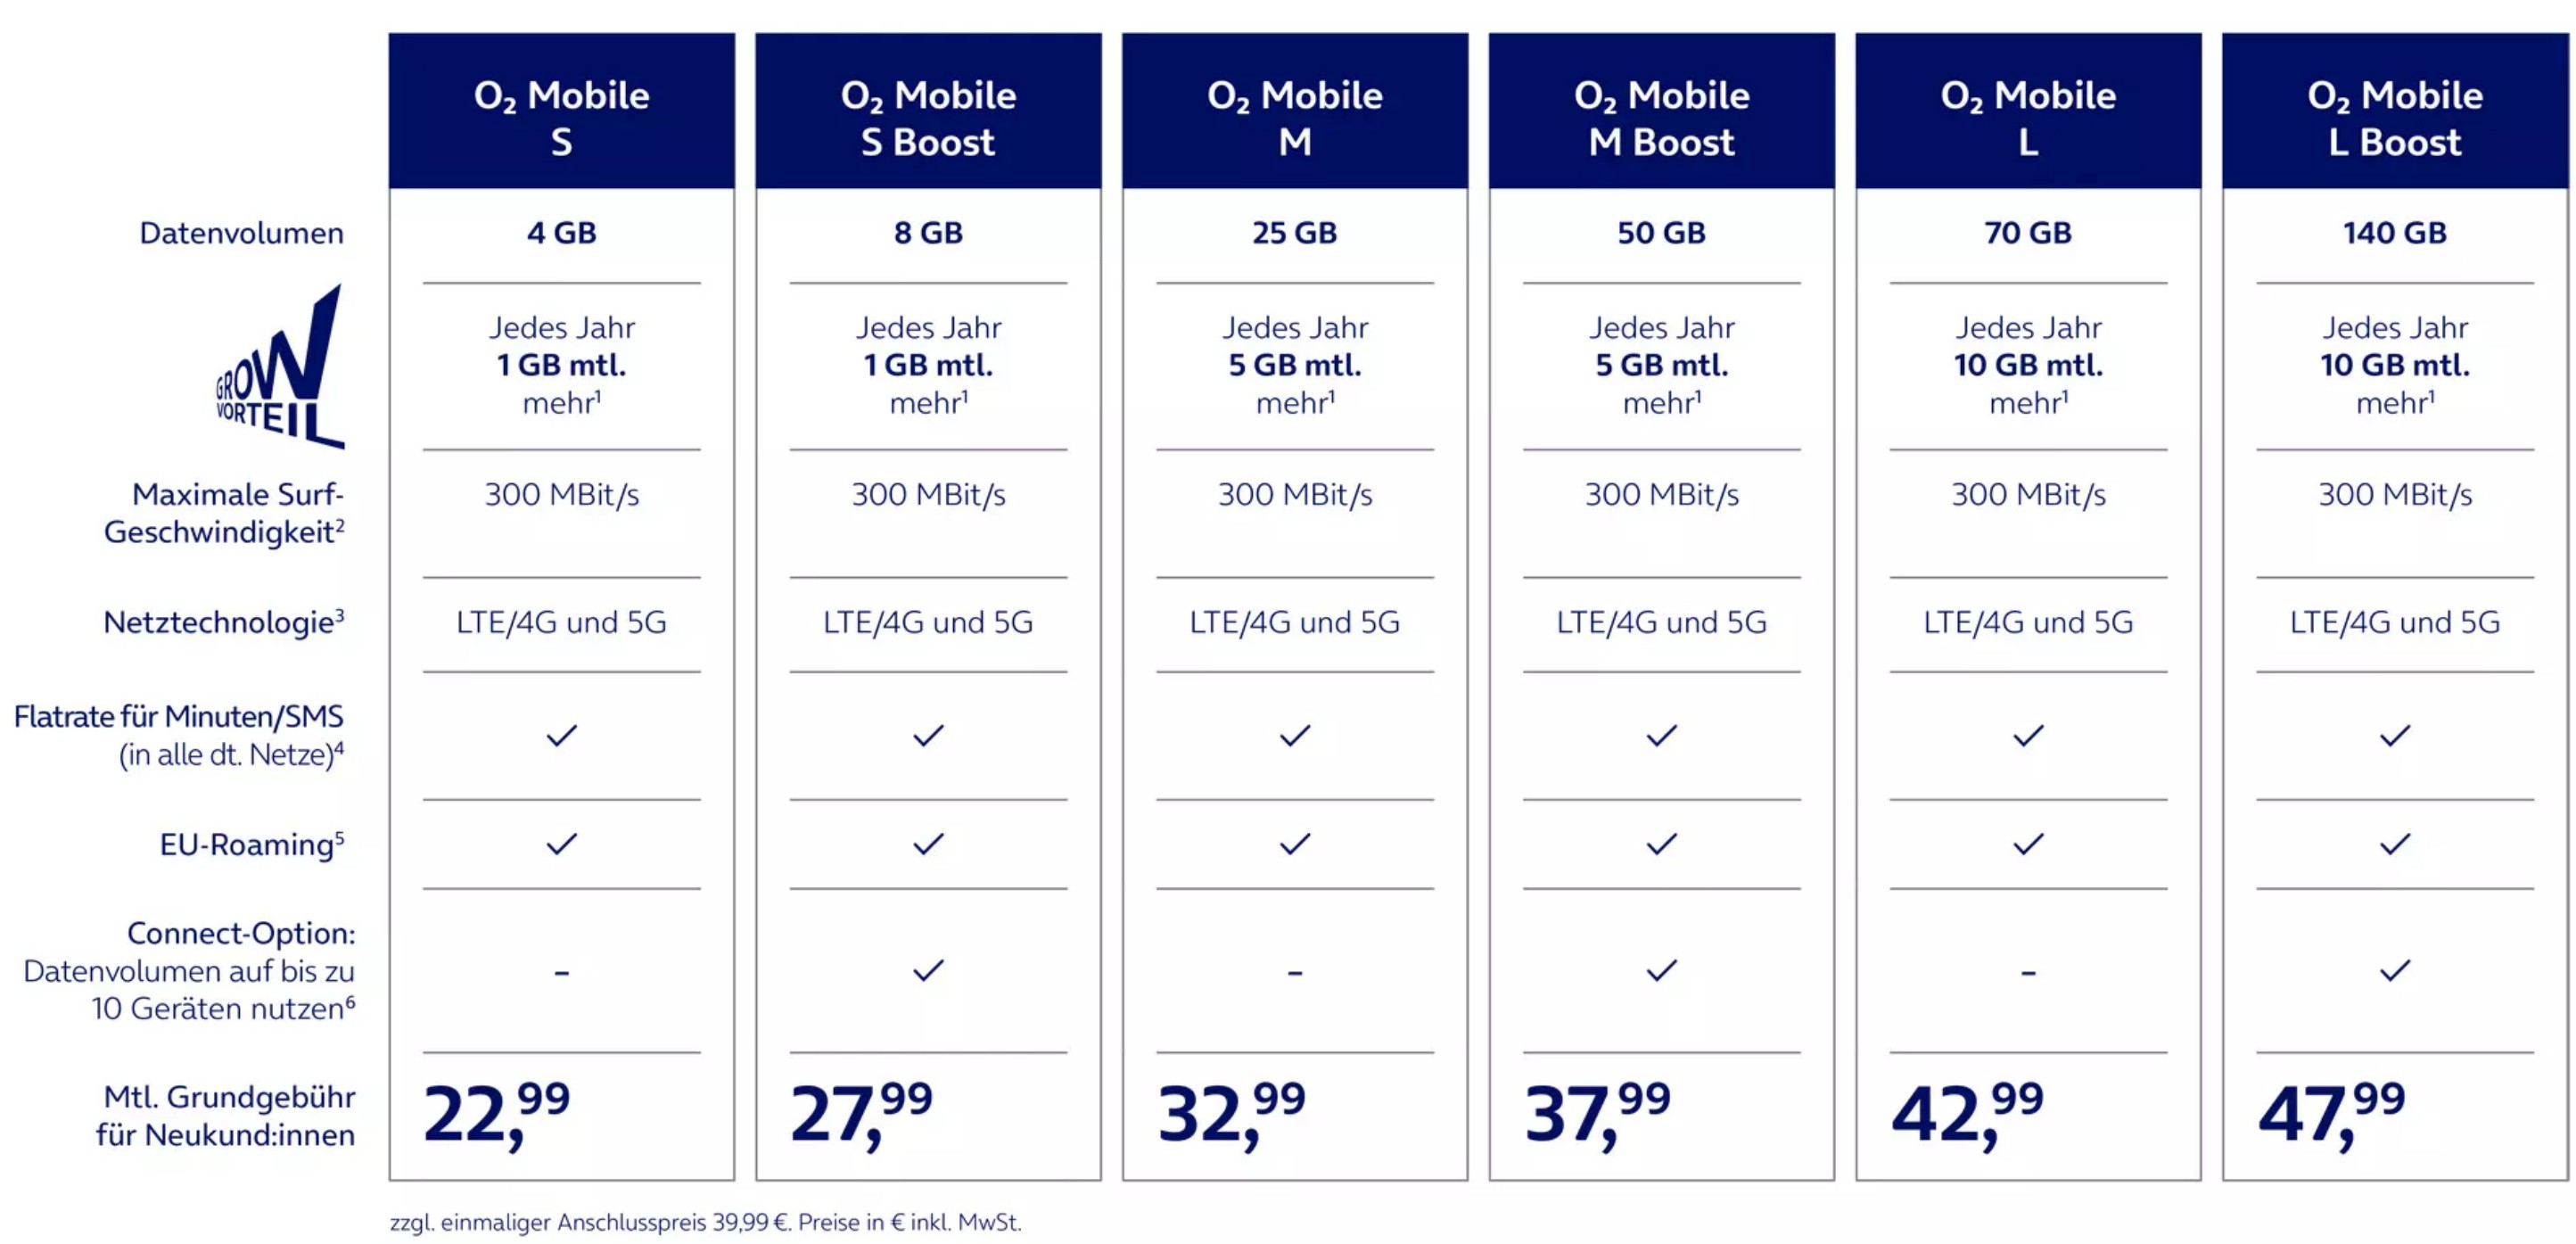 O2 Mobile Tarife: Ab 5.April neue O2 Mobile Tarife --10 Prozent teurer, mehr Datenvolumen